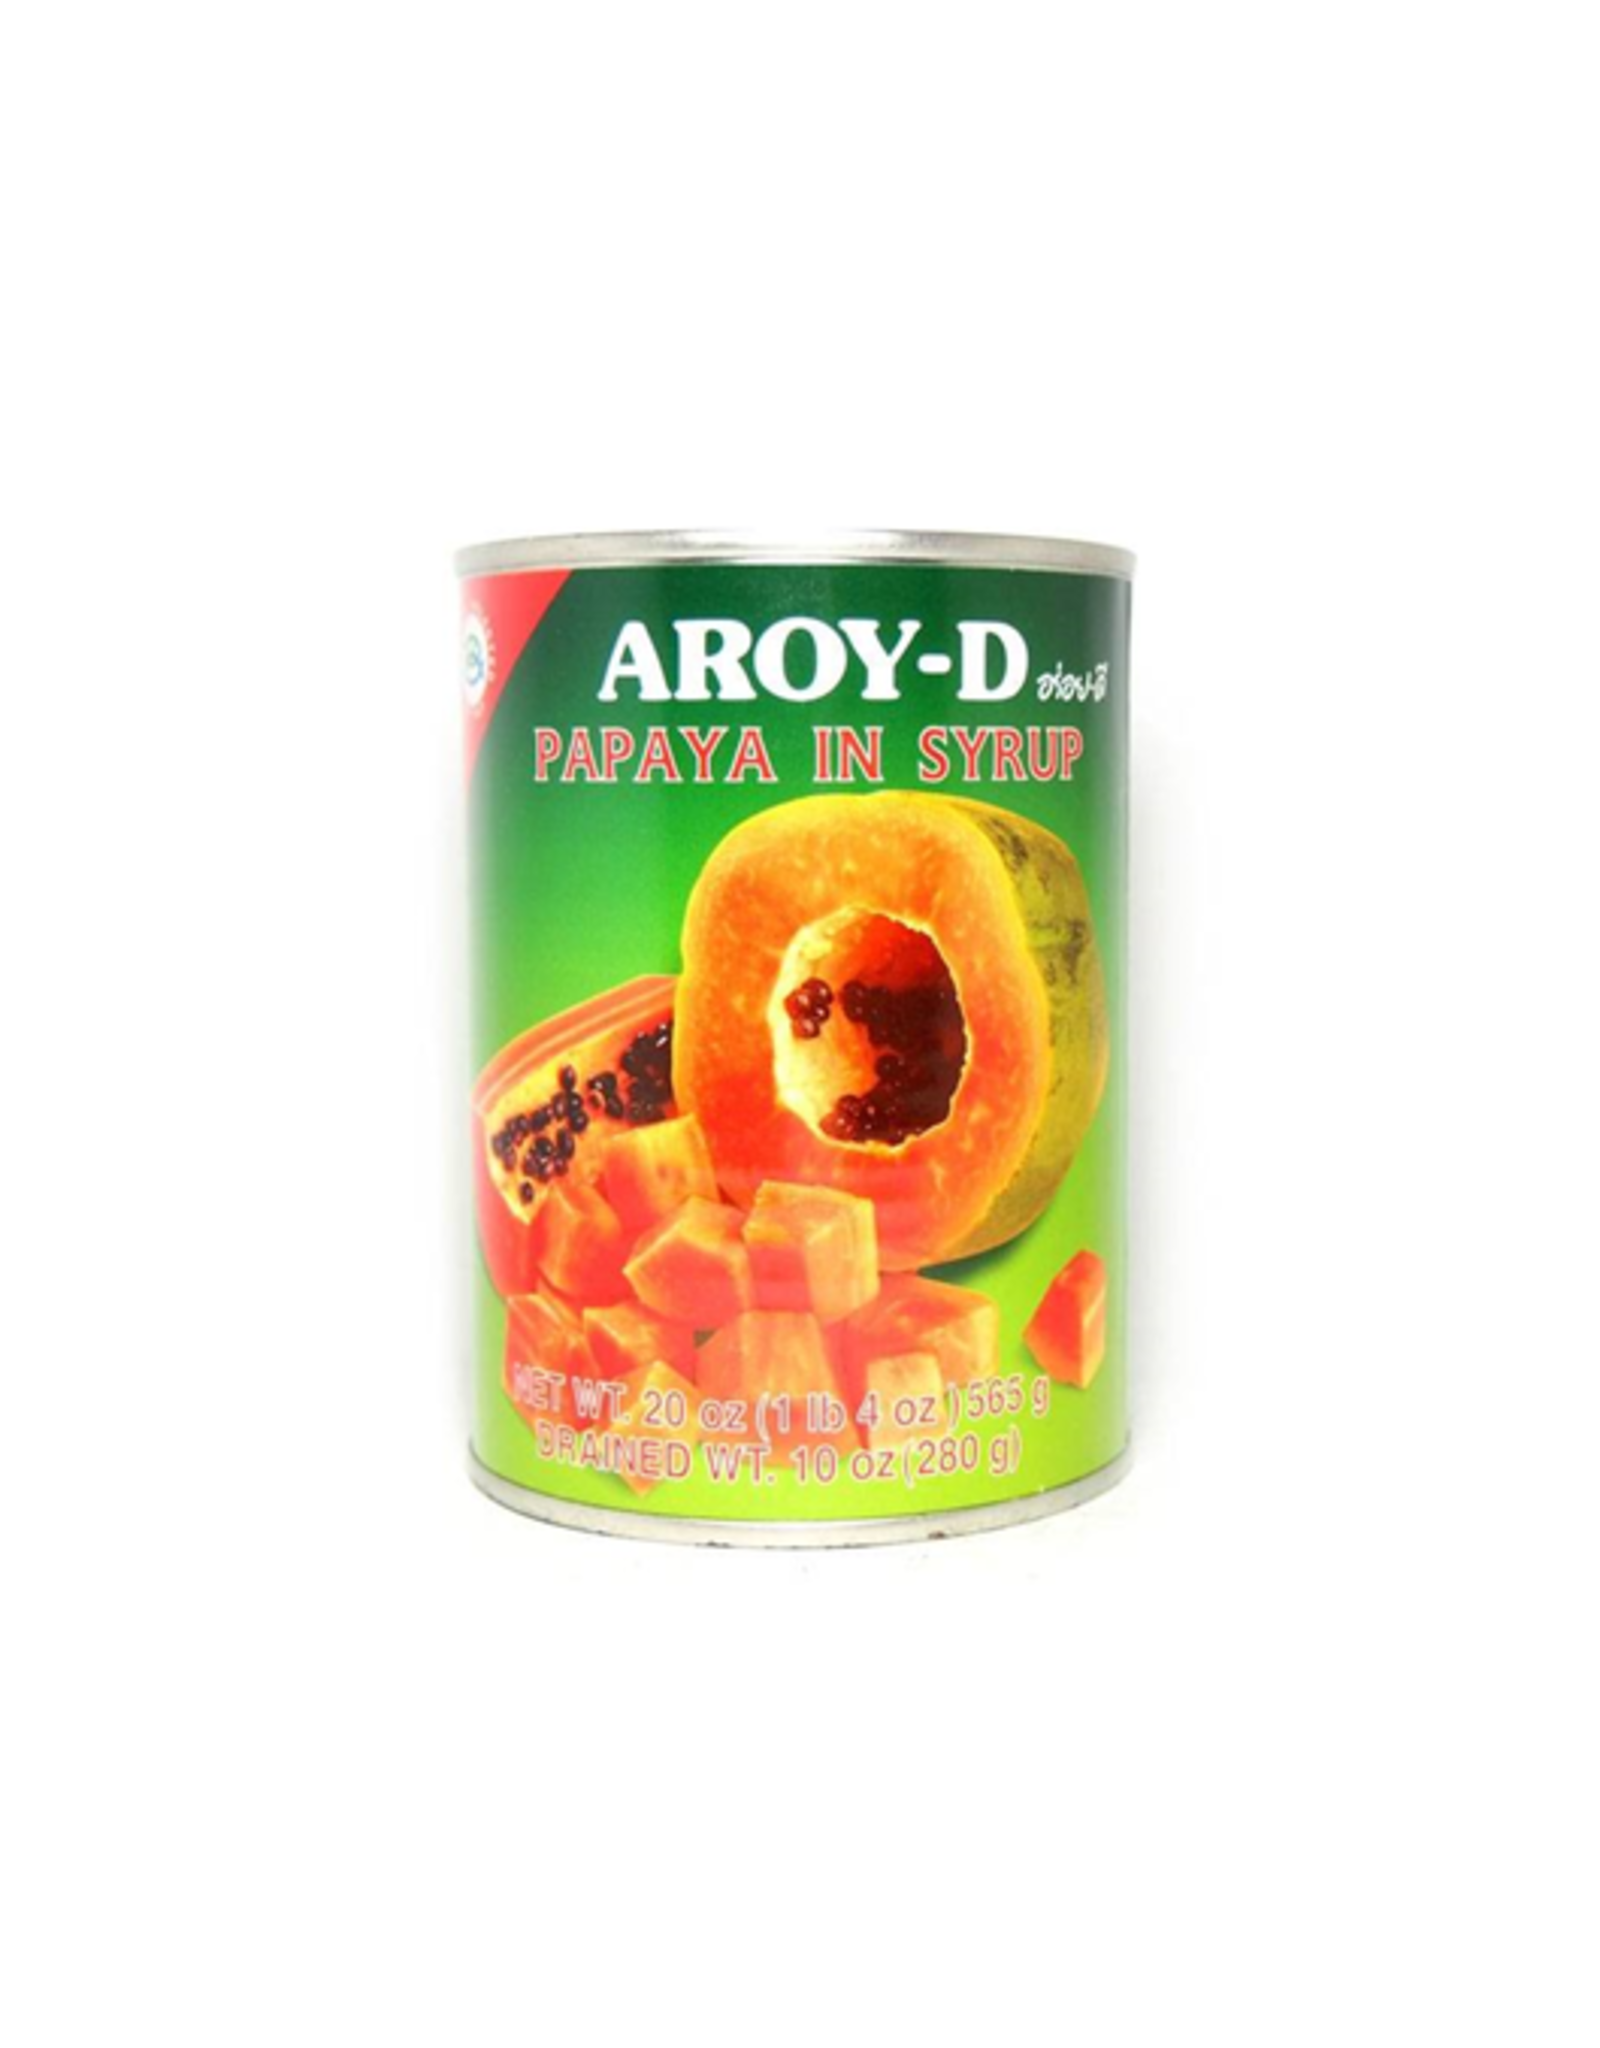 Aroy-D Papaya in Syrup